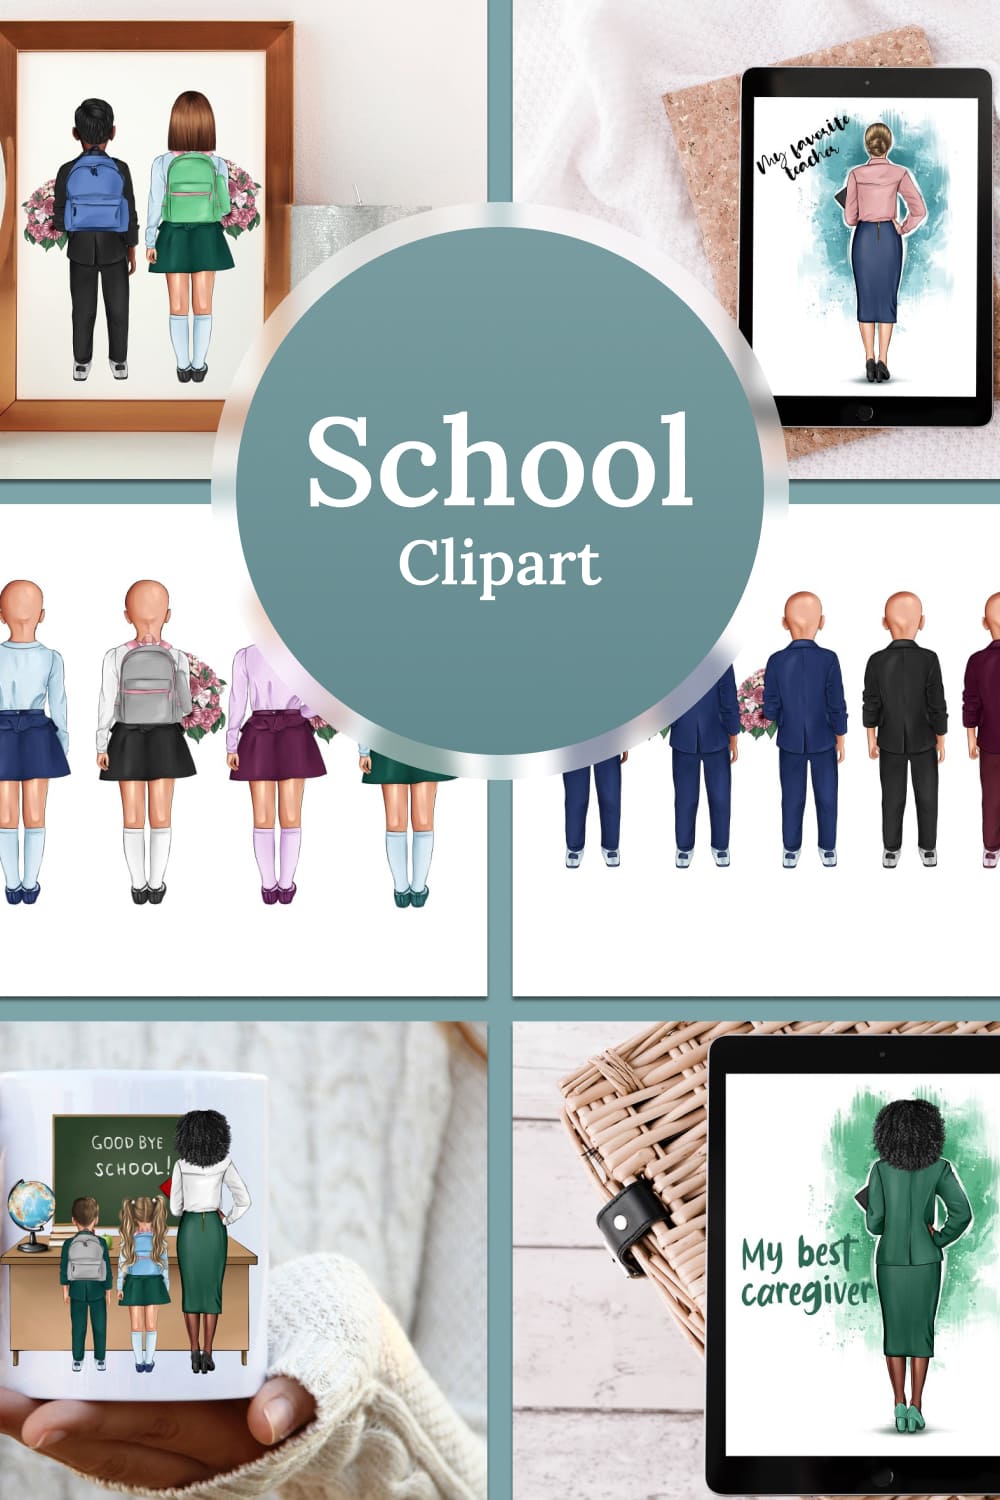 School clipart teacher s clipart - pinterest image preview.